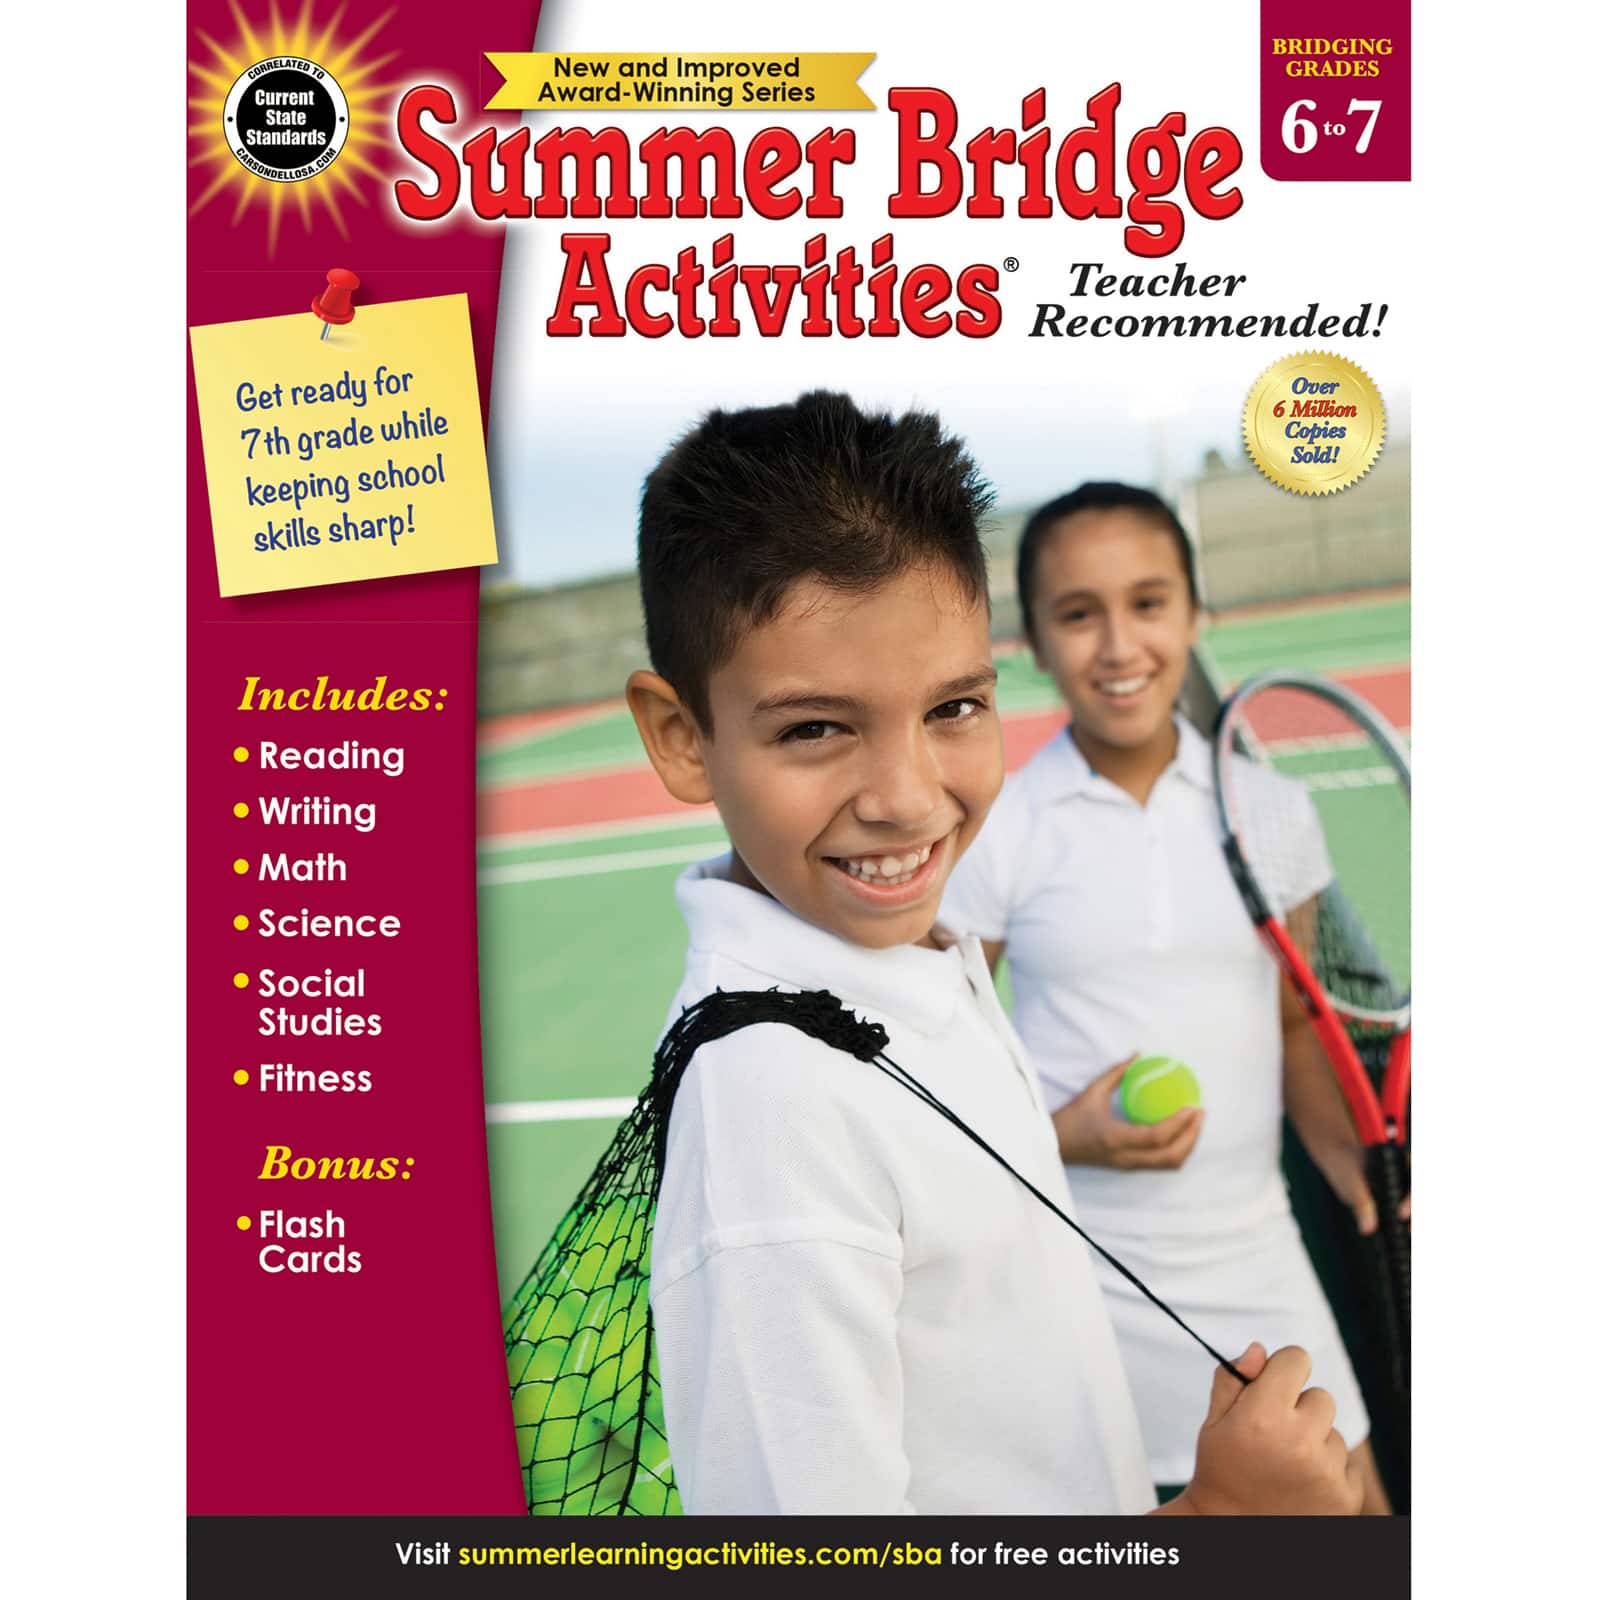 Purchase the Summer Bridge Activities®, Grades 6-7 at Michaels